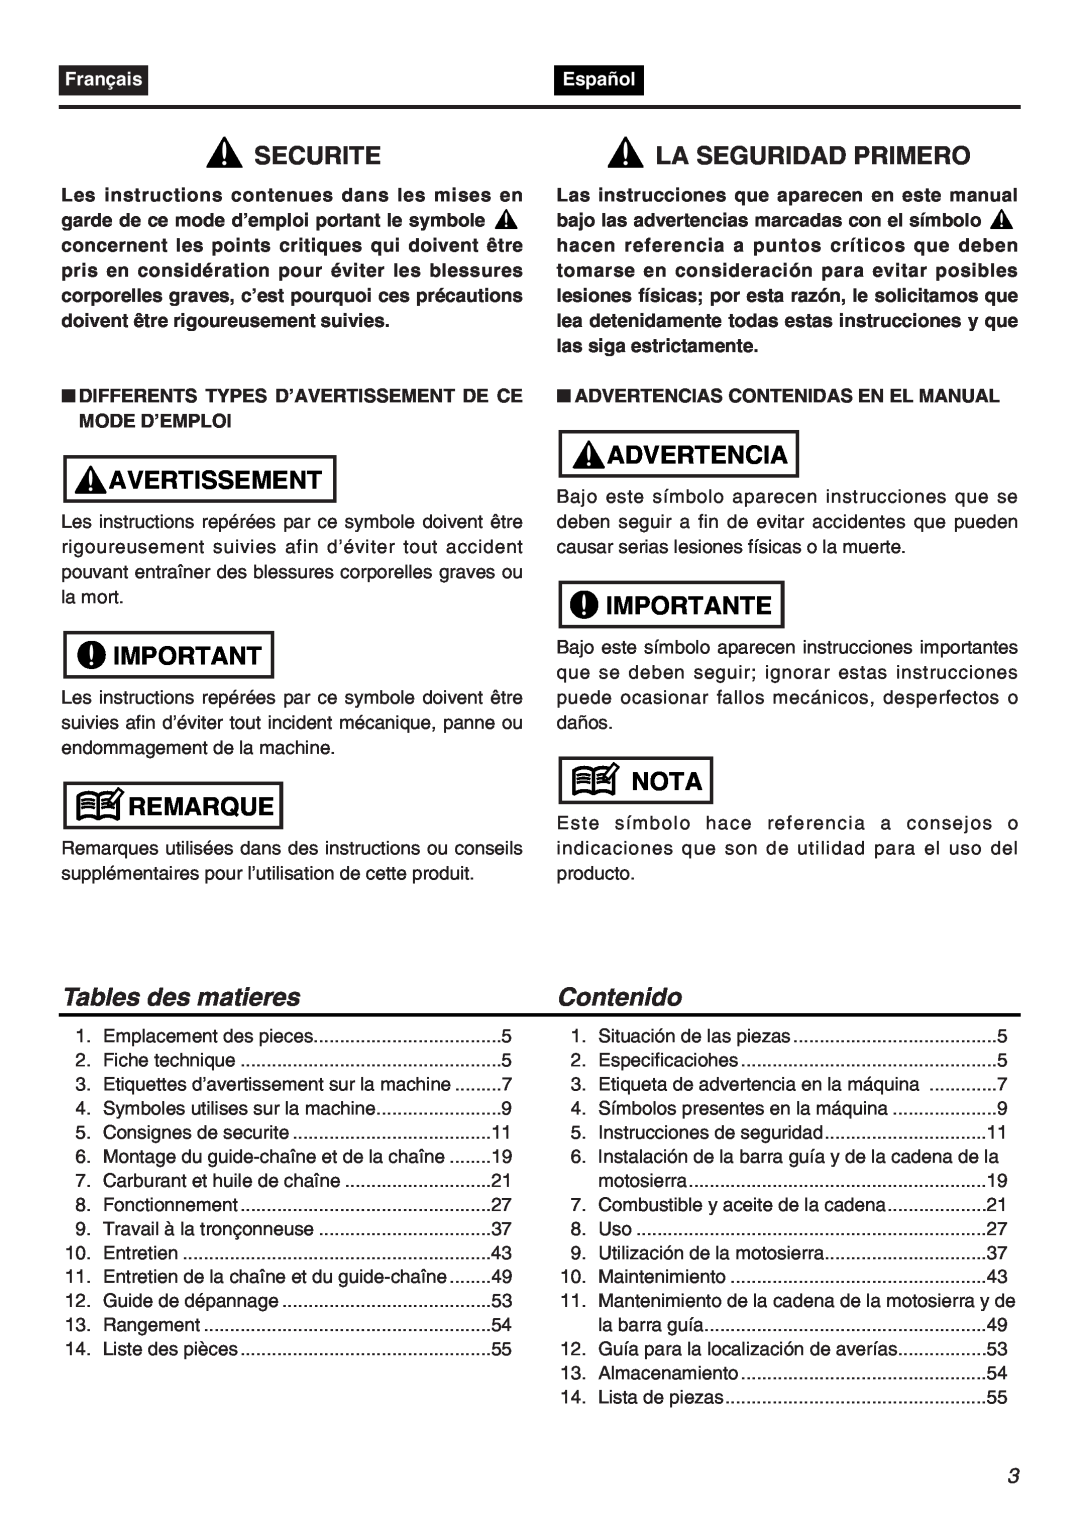 RedMax G5000AVS manual Securite, Avertissement, Remarque, Advertencia, Importante, Nota, Tables des matieres, Contenido 